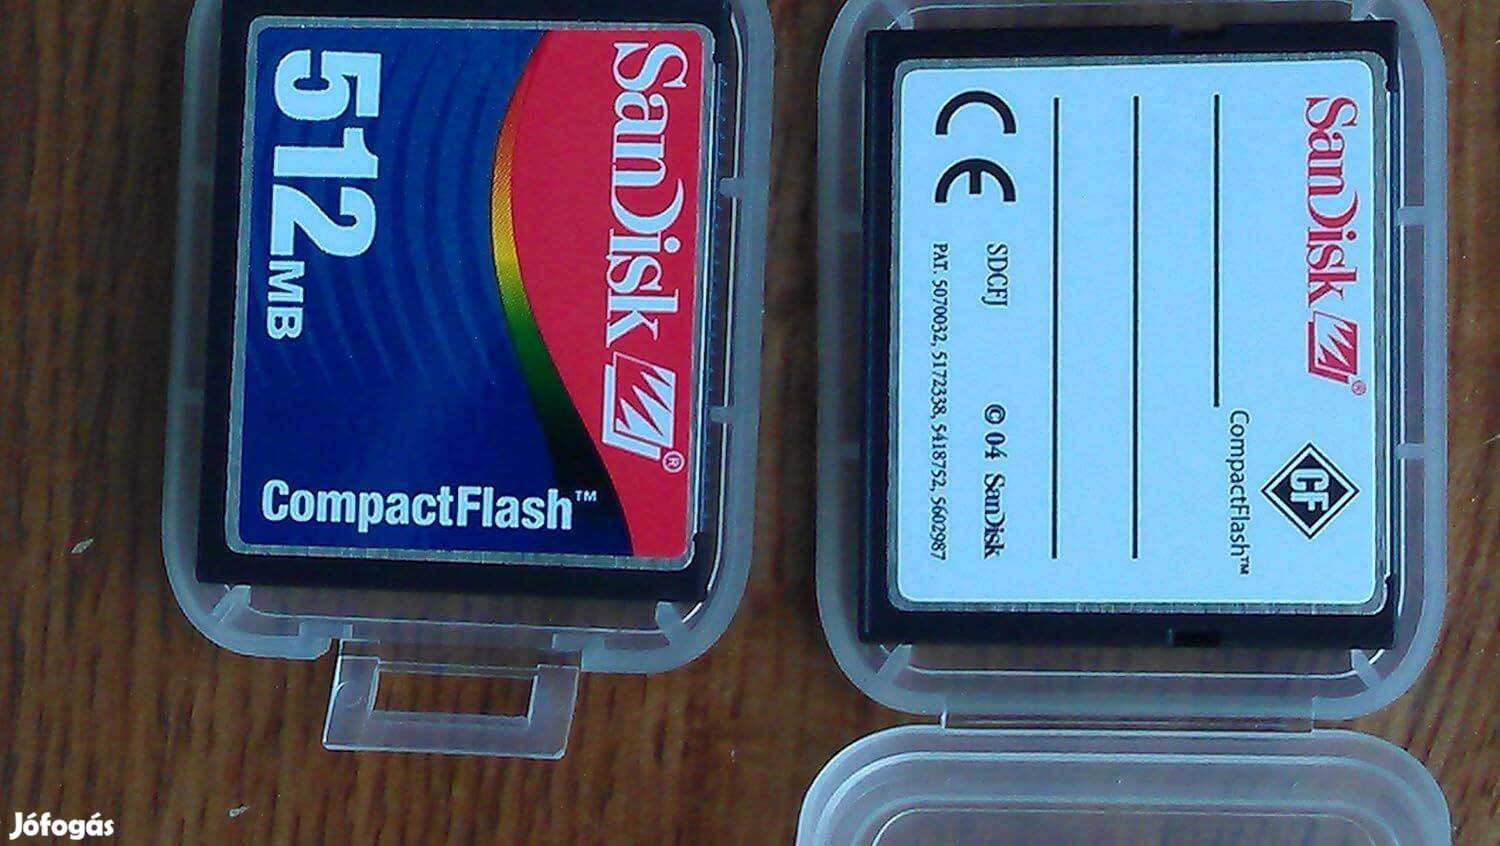 Sandisk Compackflash 512mb card